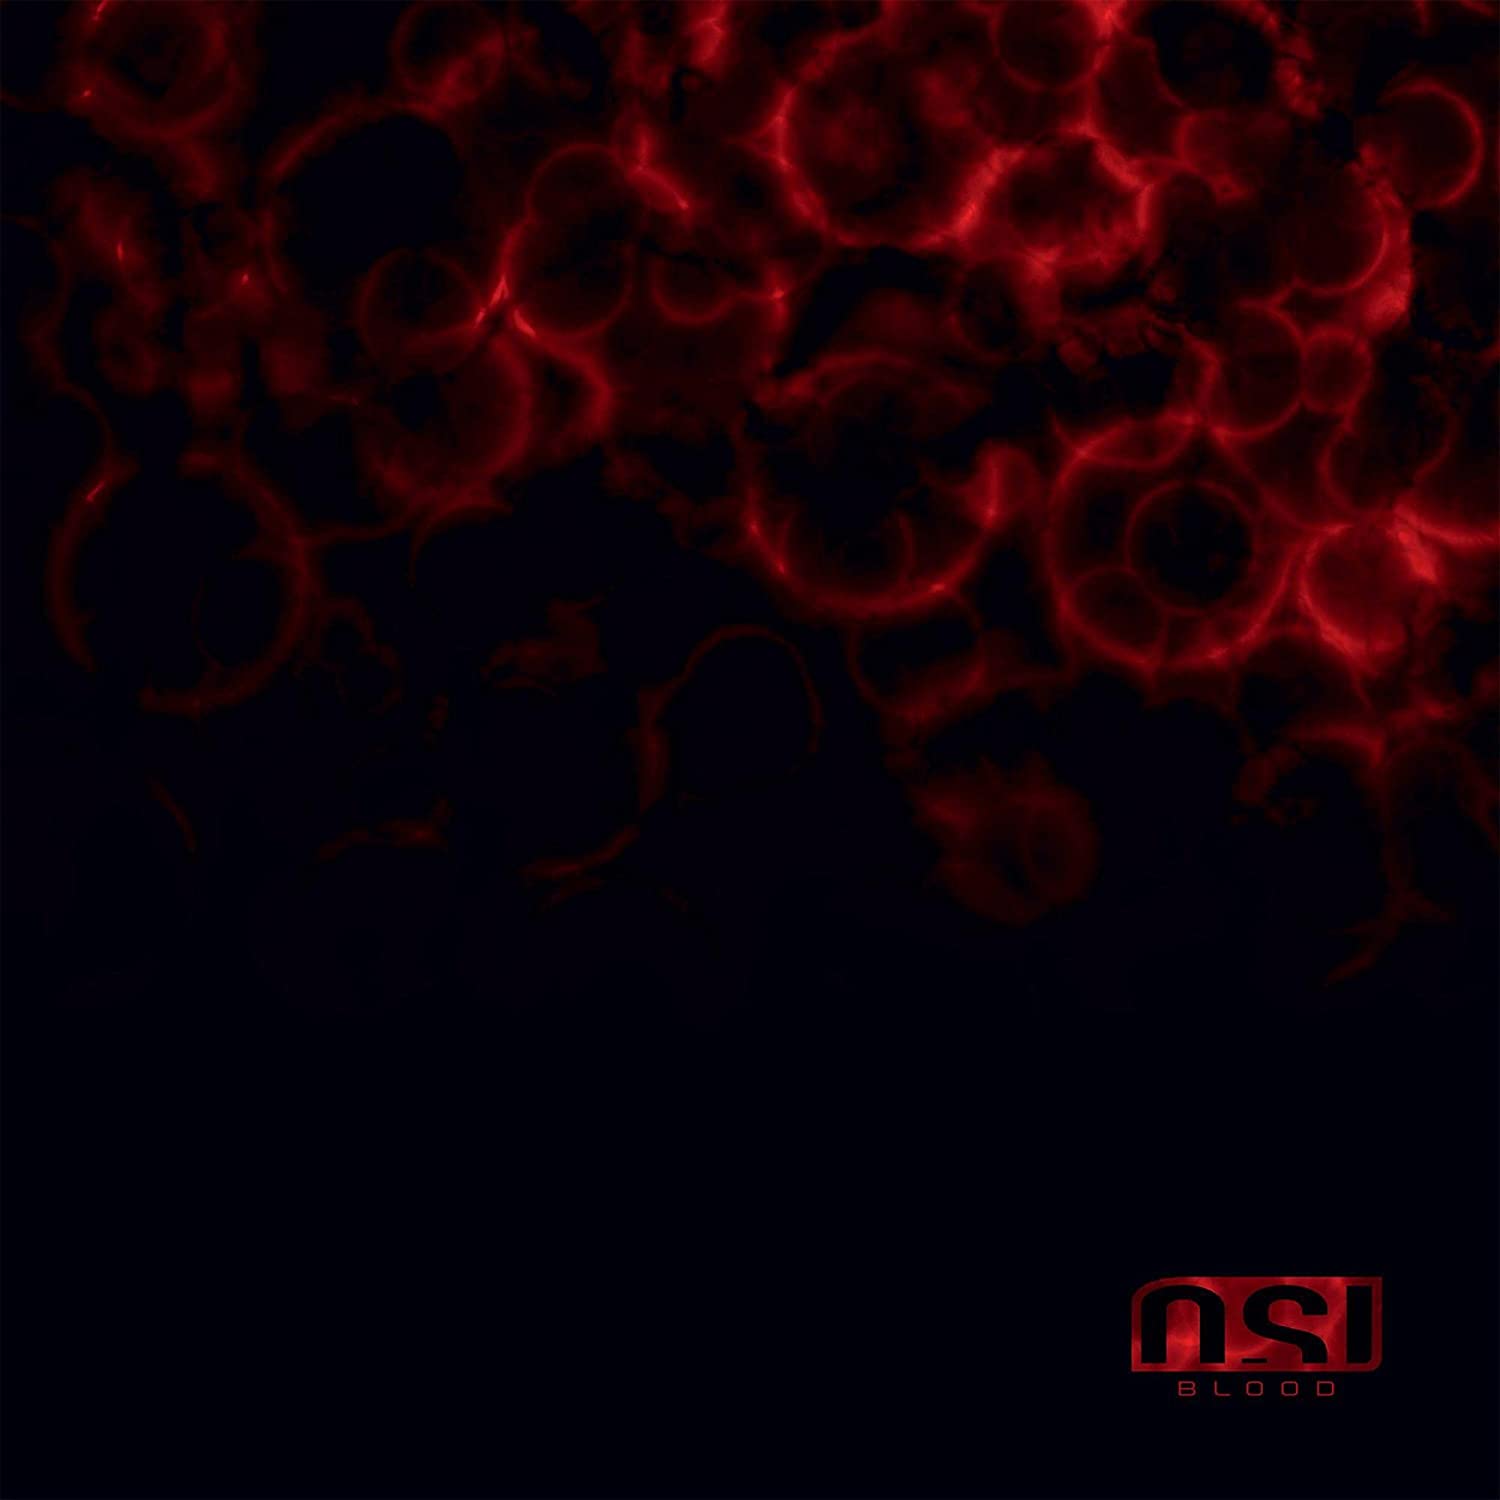 OSI - Blood (2017 reissue with 3 bonus tracks) - CD - New